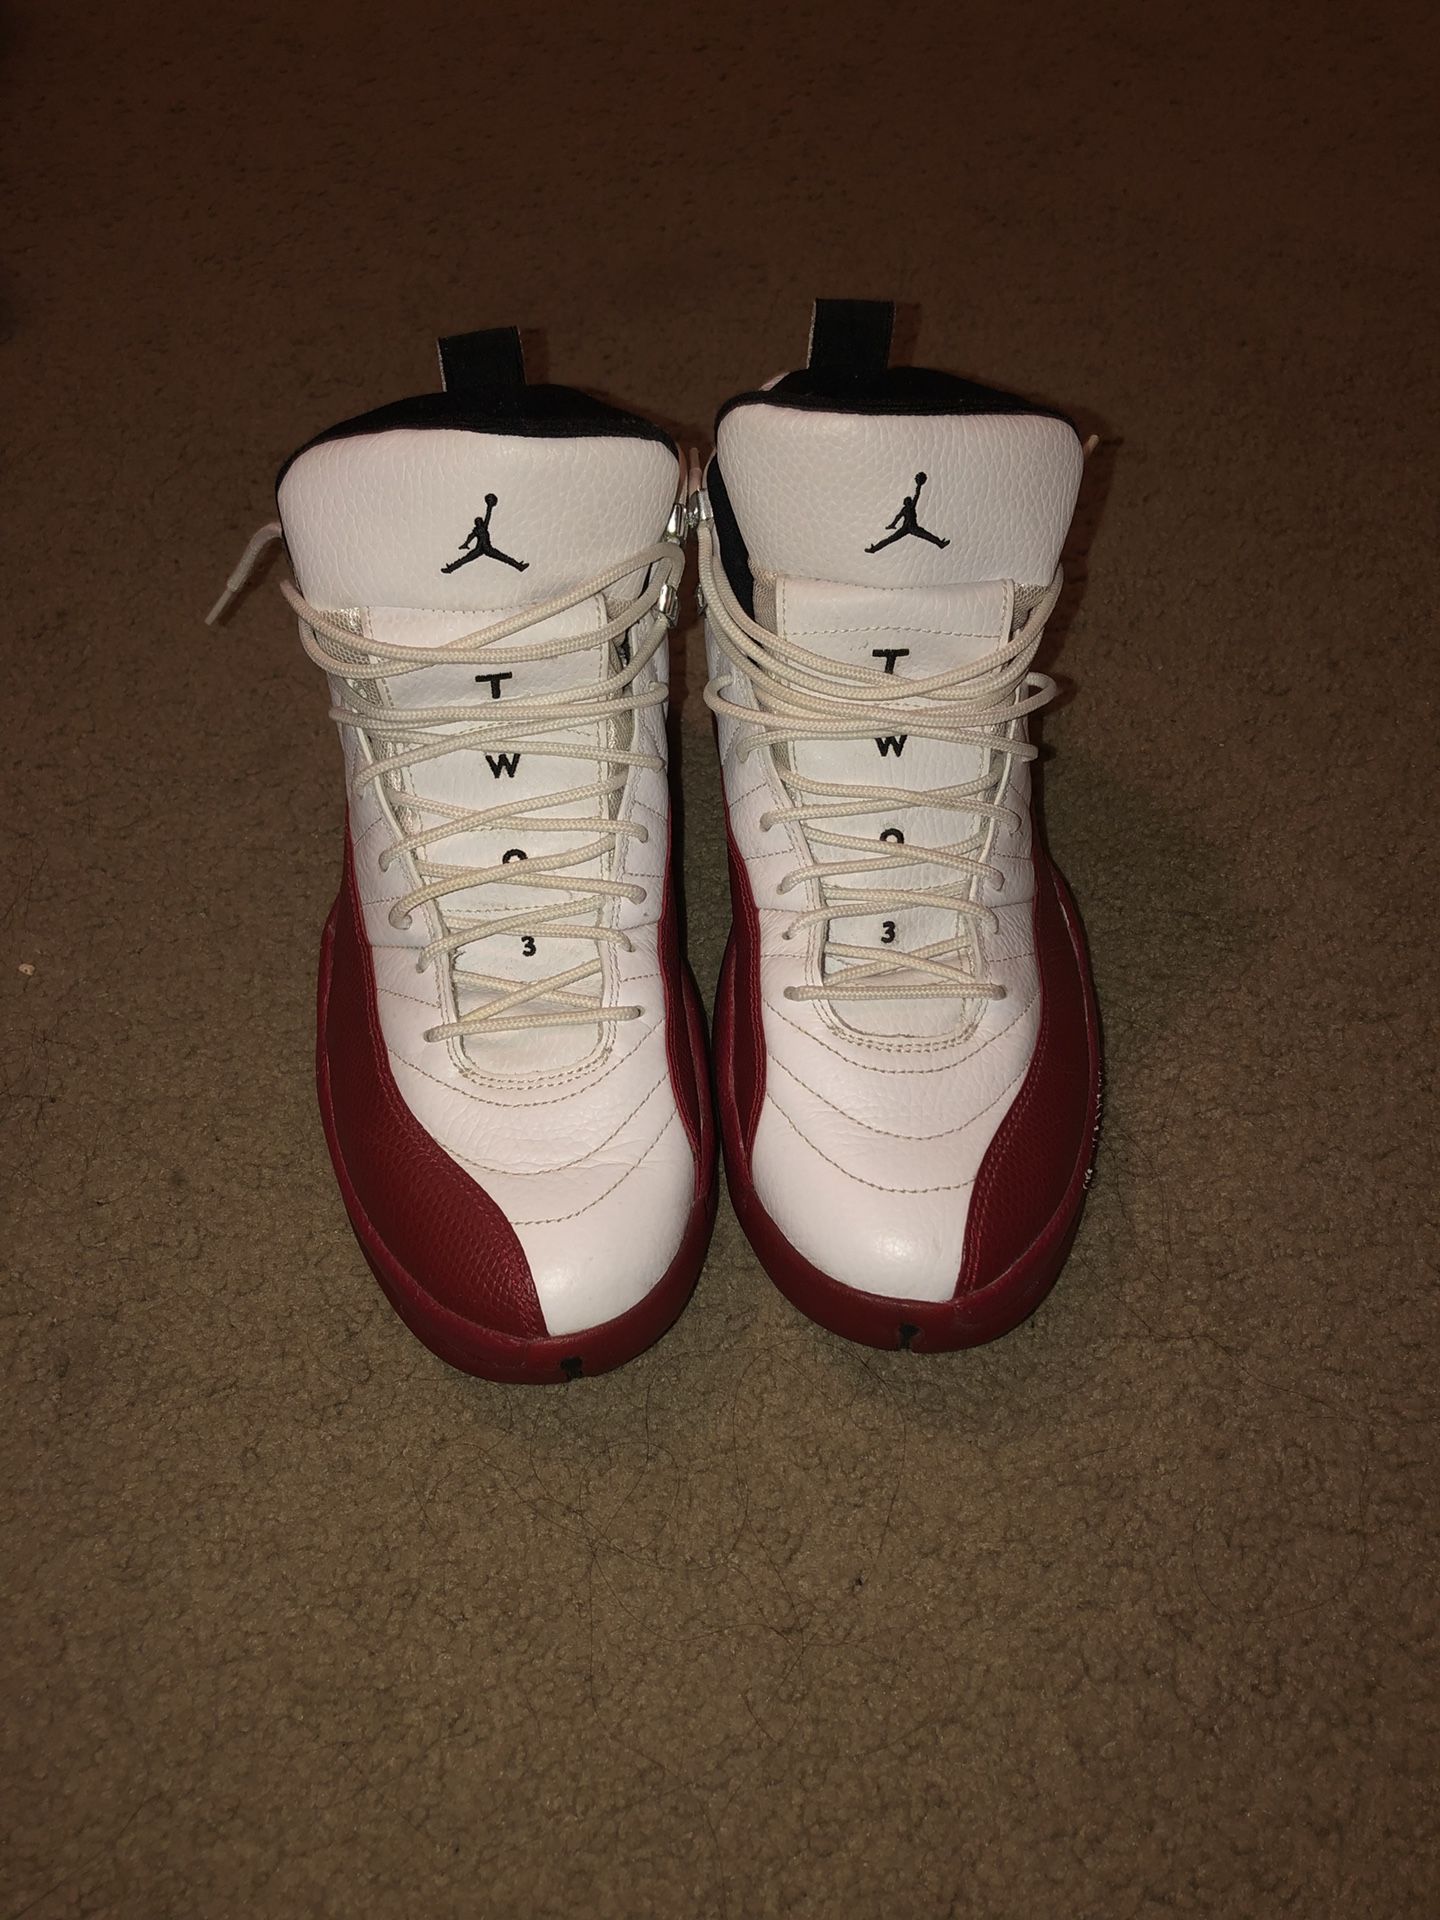 Jordan 12 White/Red sz. 11